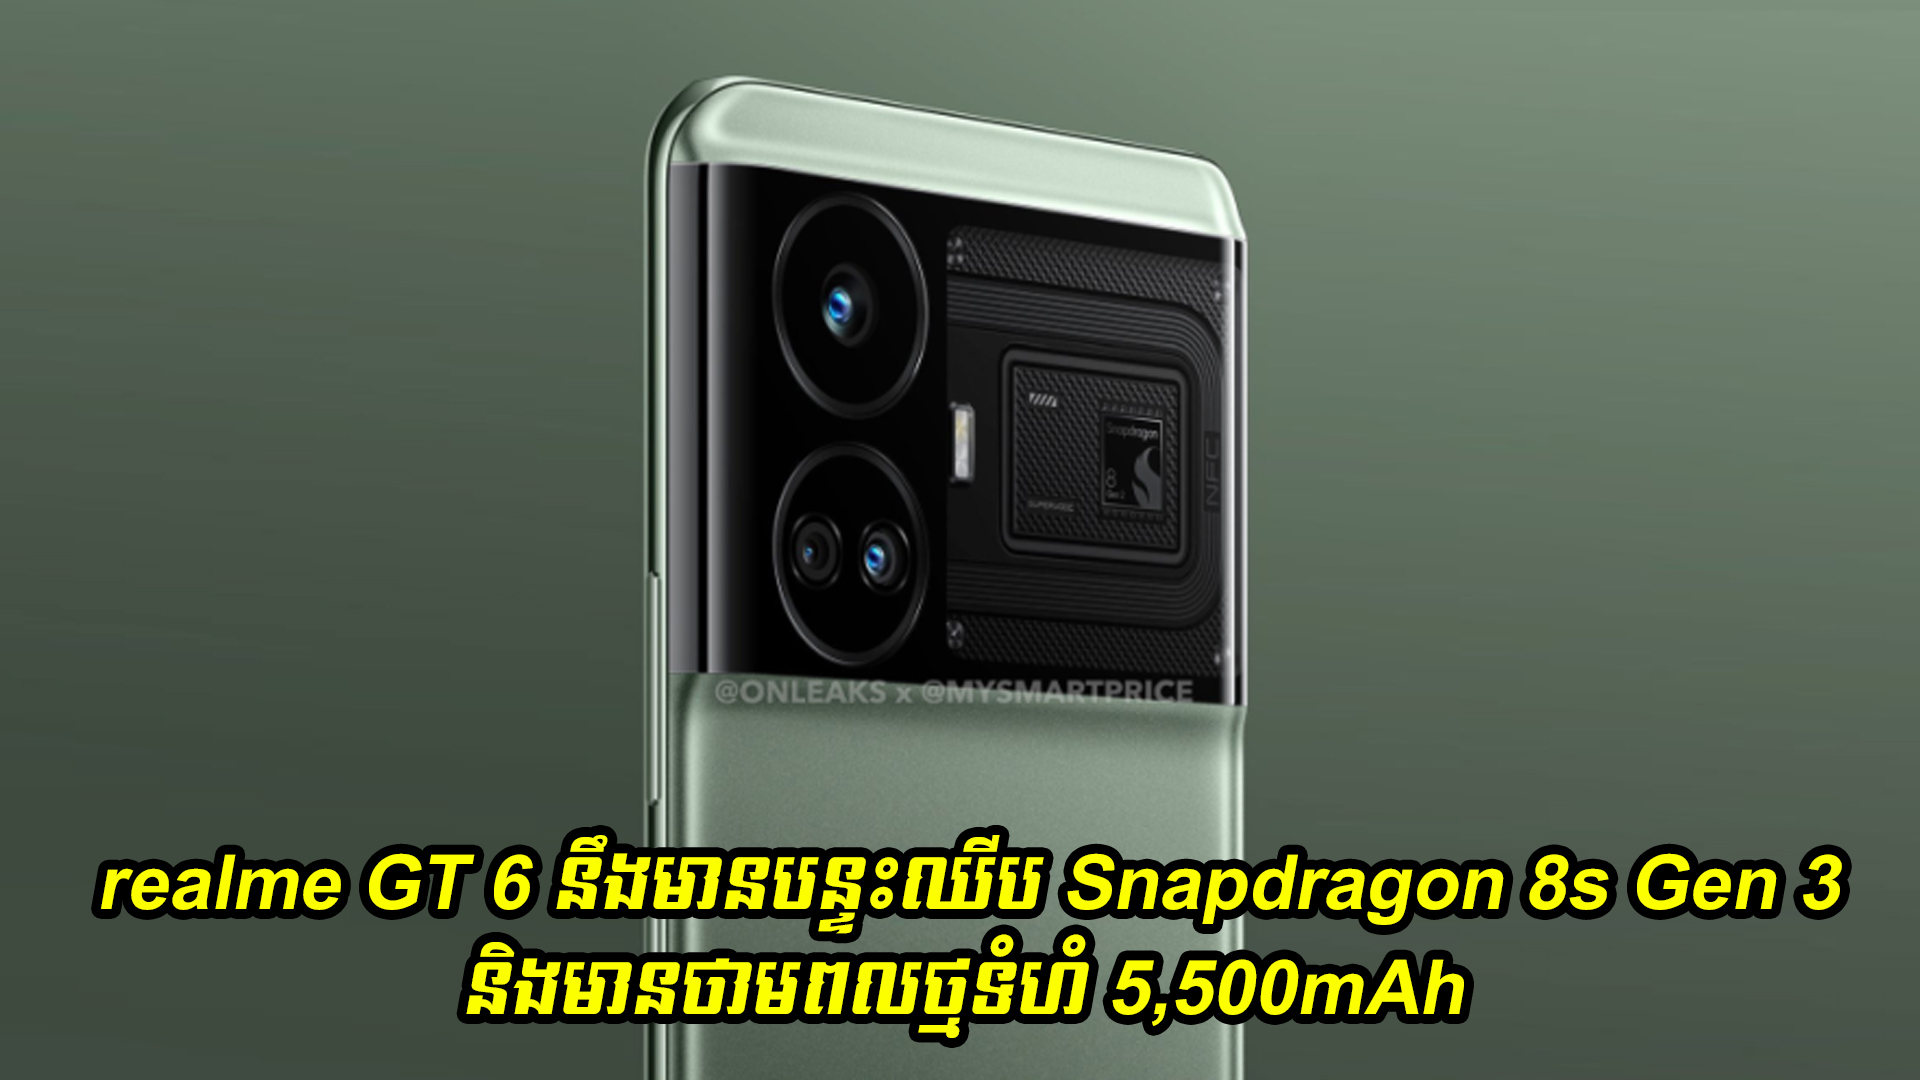 realme GT 6 នឹងមានបន្ទះឈីប Snapdragon 8s Gen 3 និងមានថាមពលថ្មទំហំ 5,500mAh